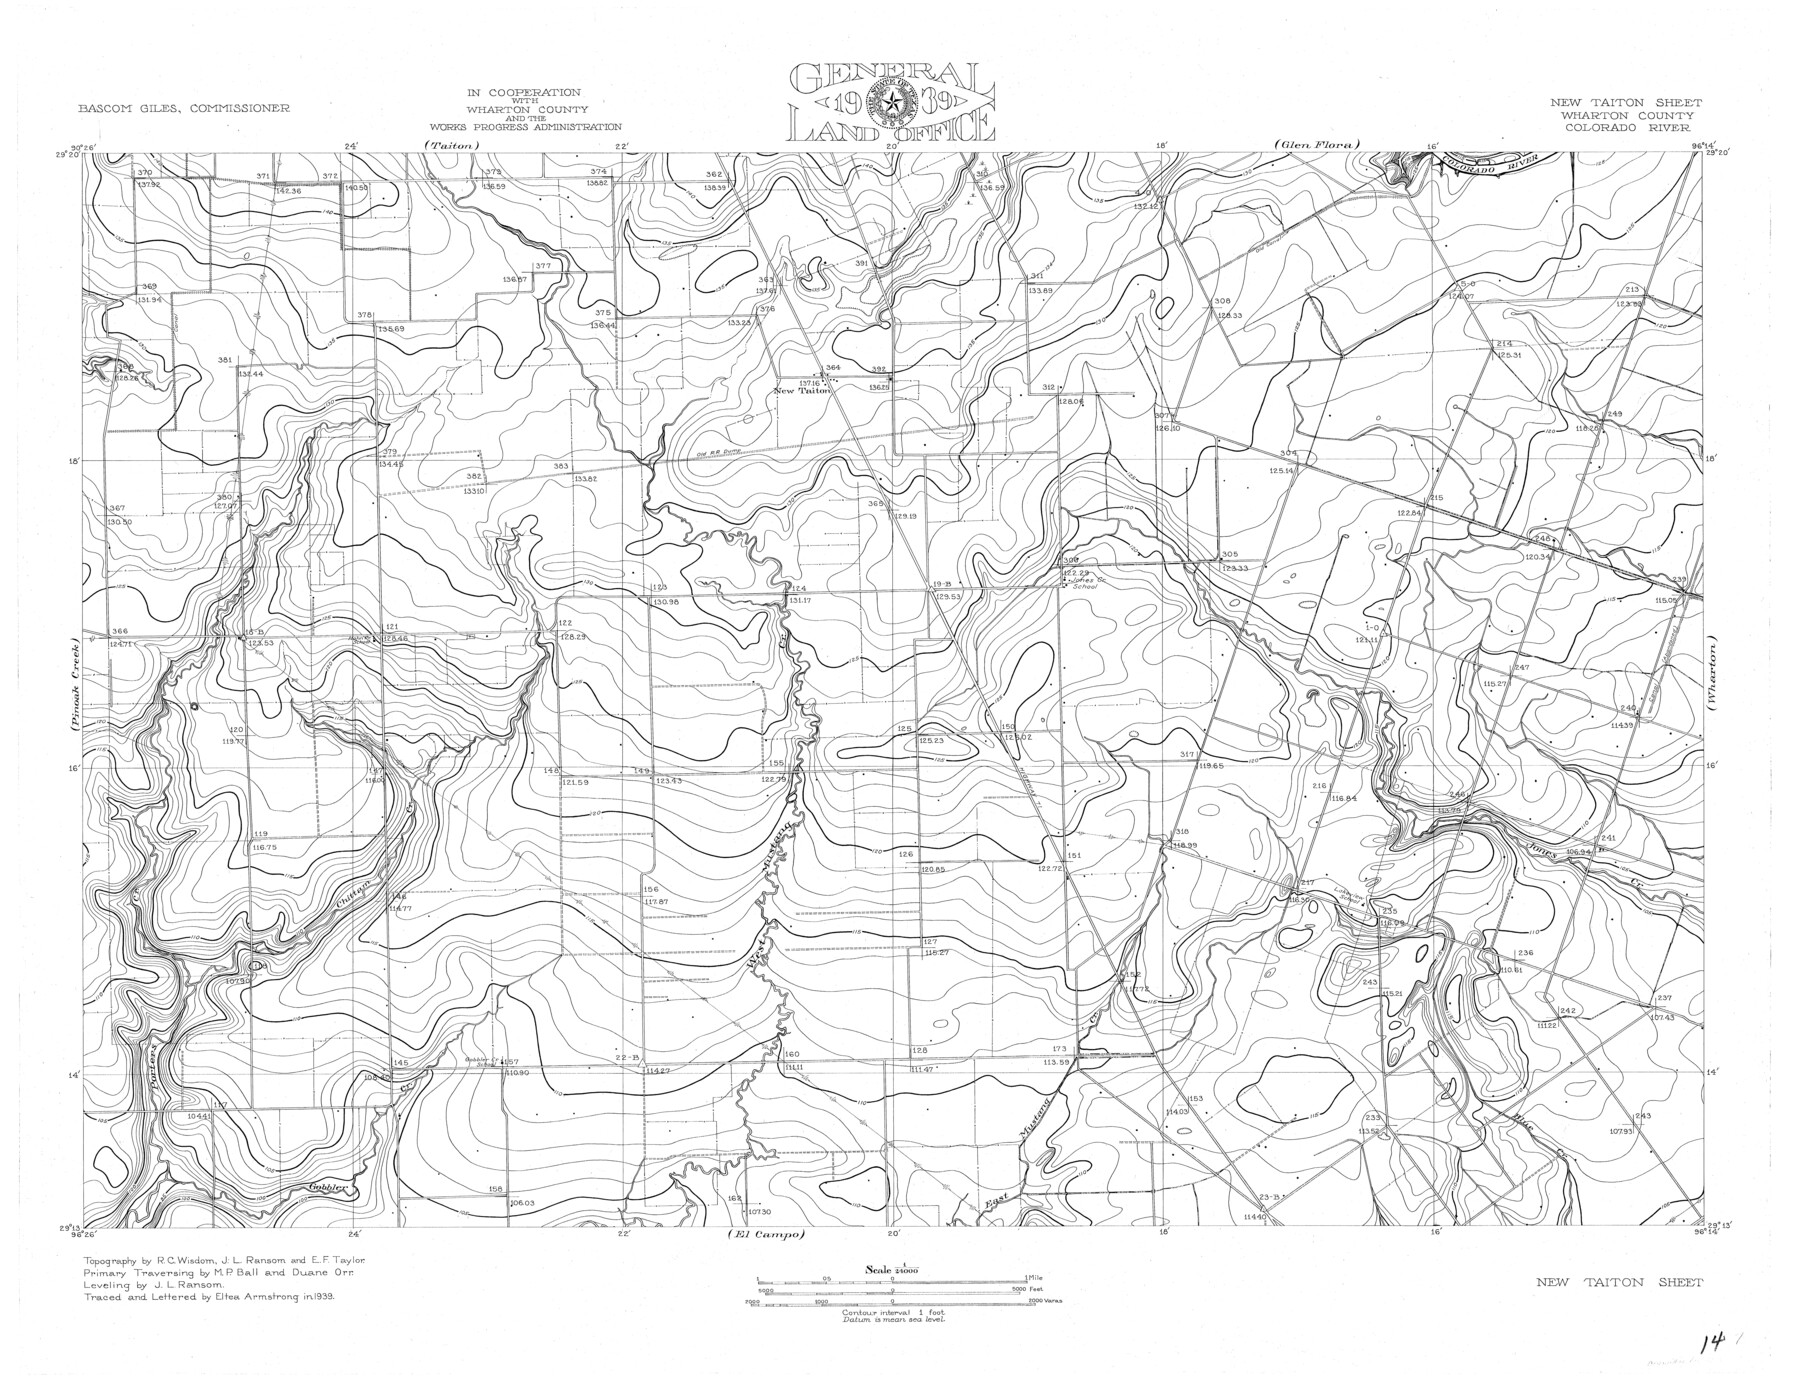 65313, Colorado River, New Taiton Sheet, General Map Collection